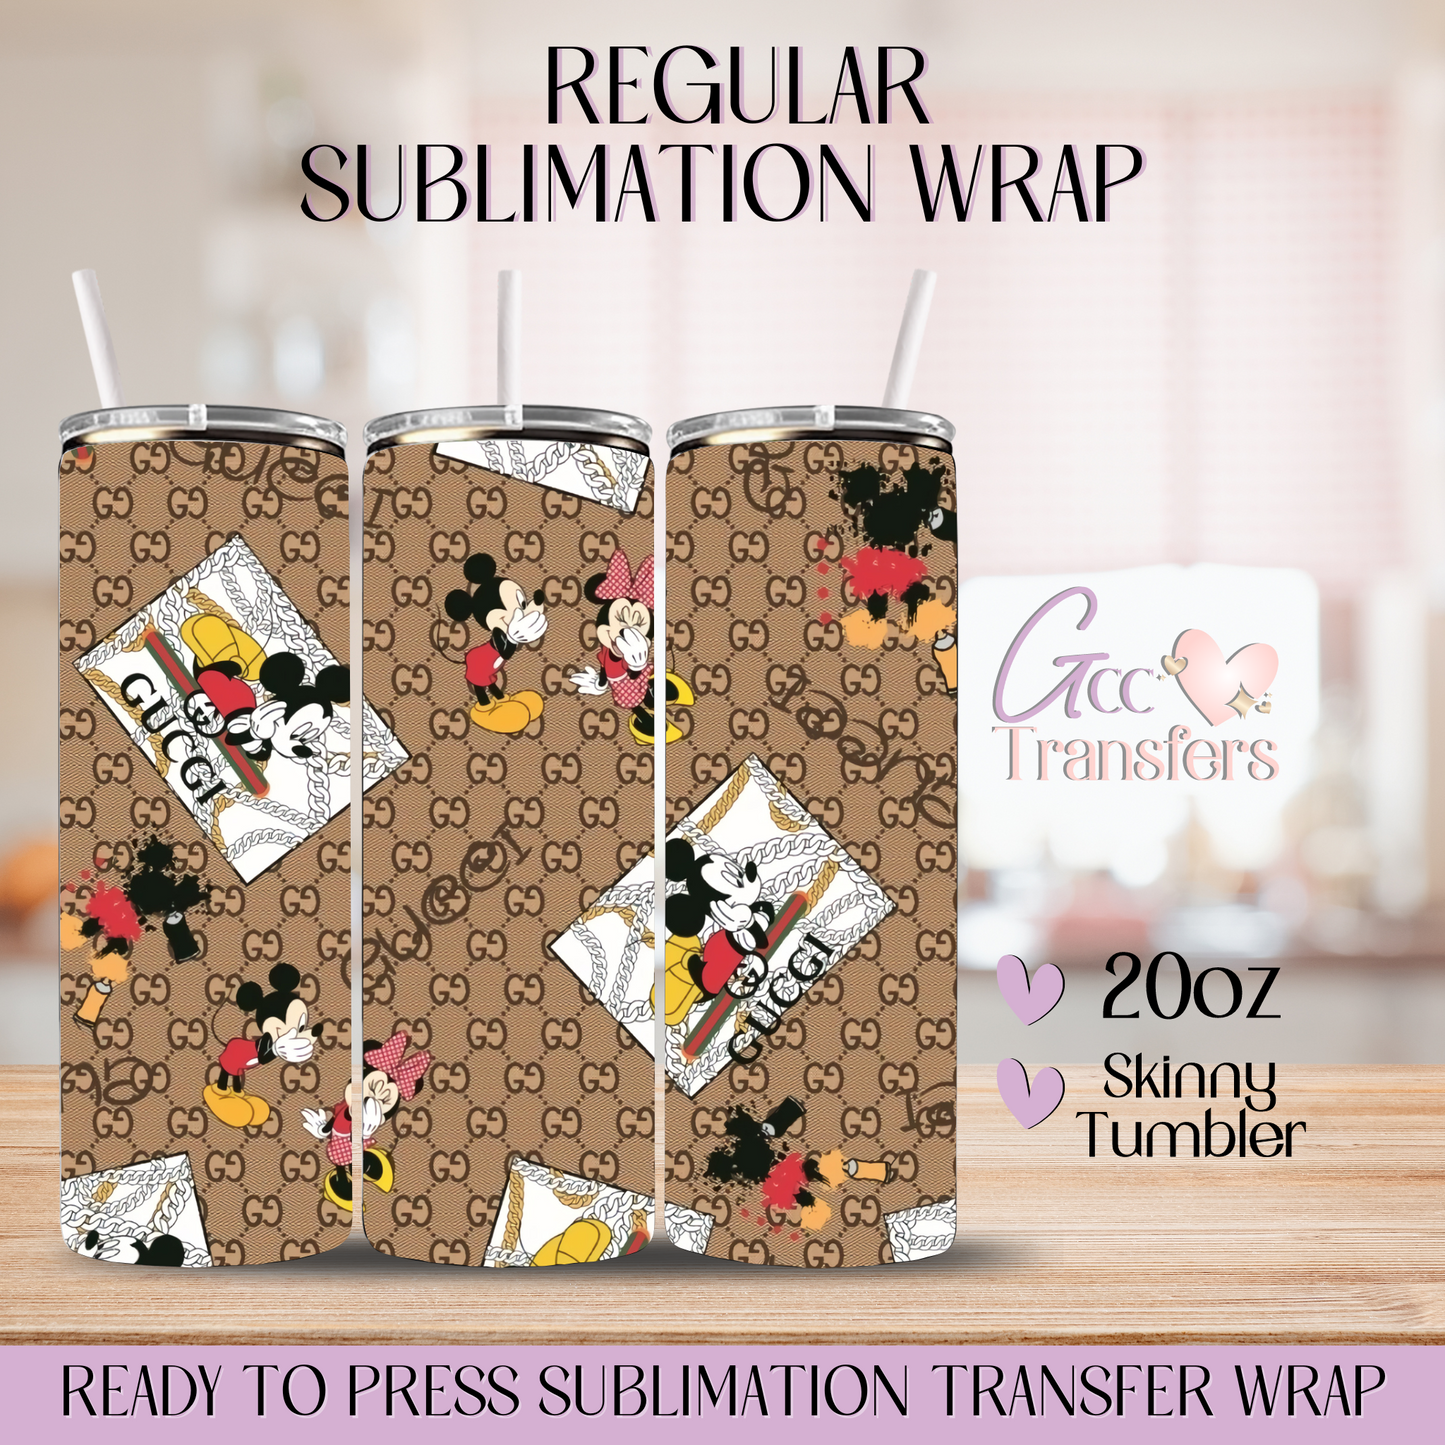 Beige Luxury Mouse Pattern - 20oz Regular Sublimation Wrap